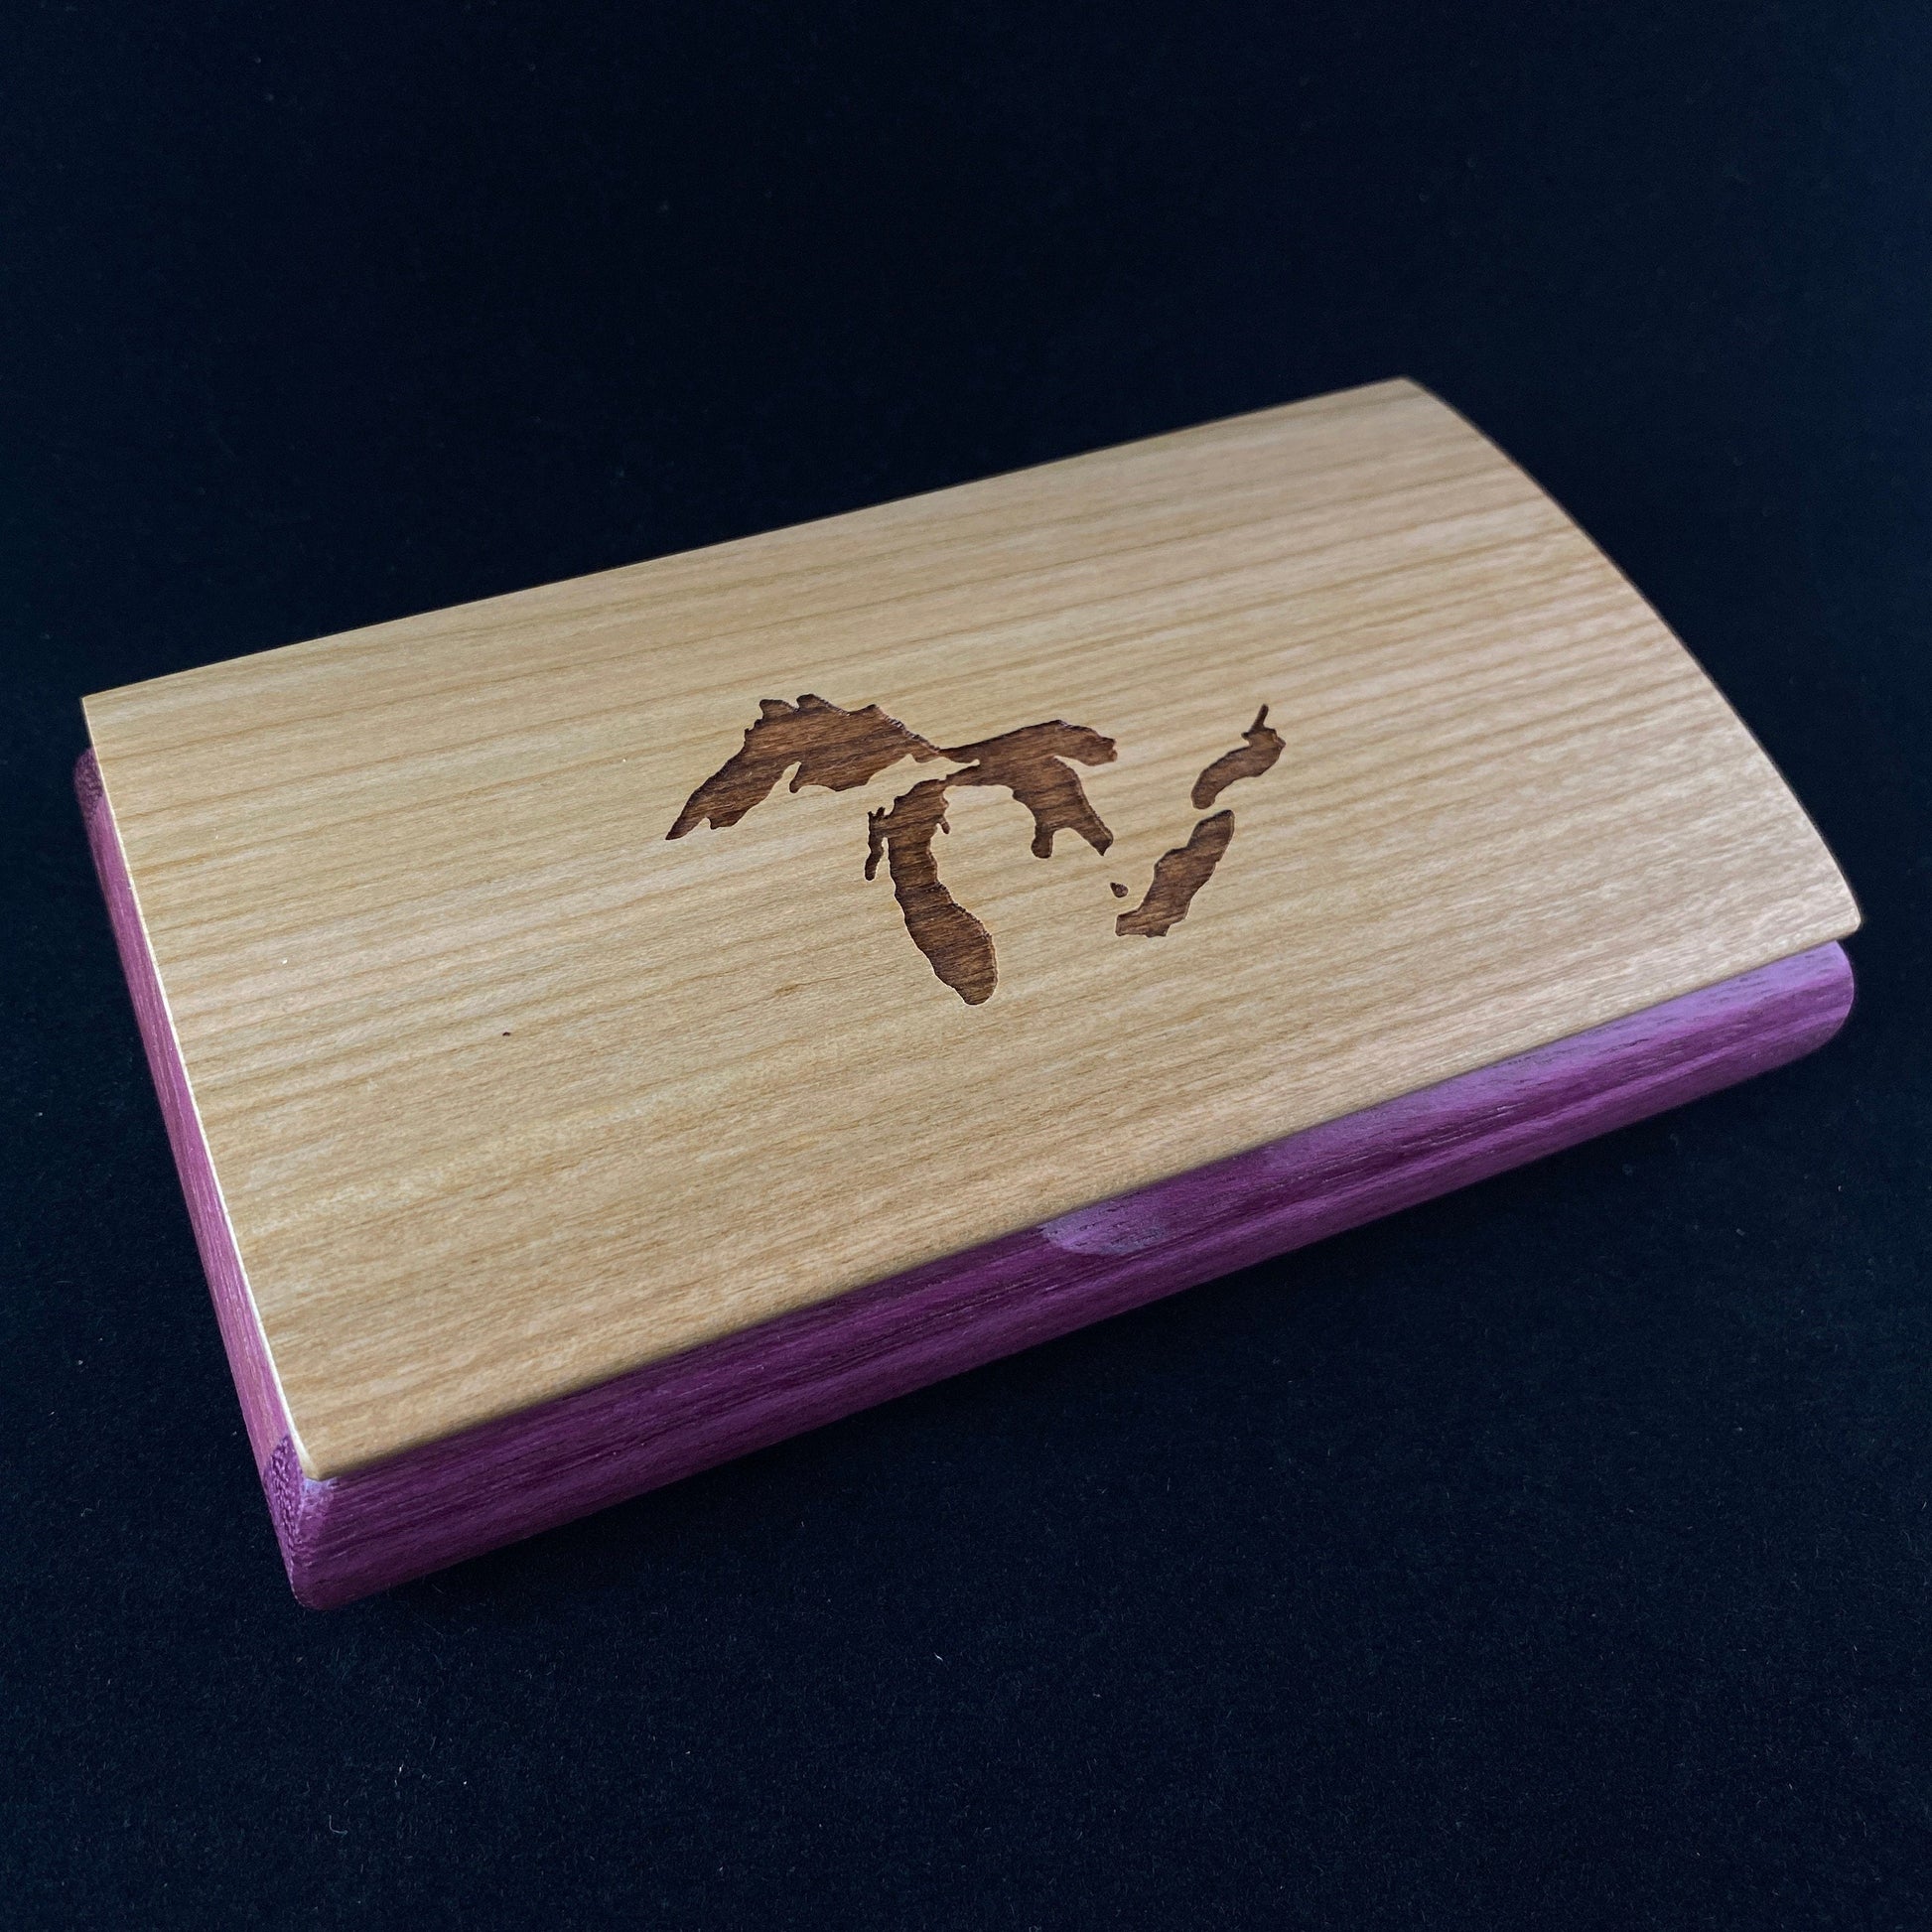 Great Lakes Handmade Wooden Box - Cherry and Purpleheart